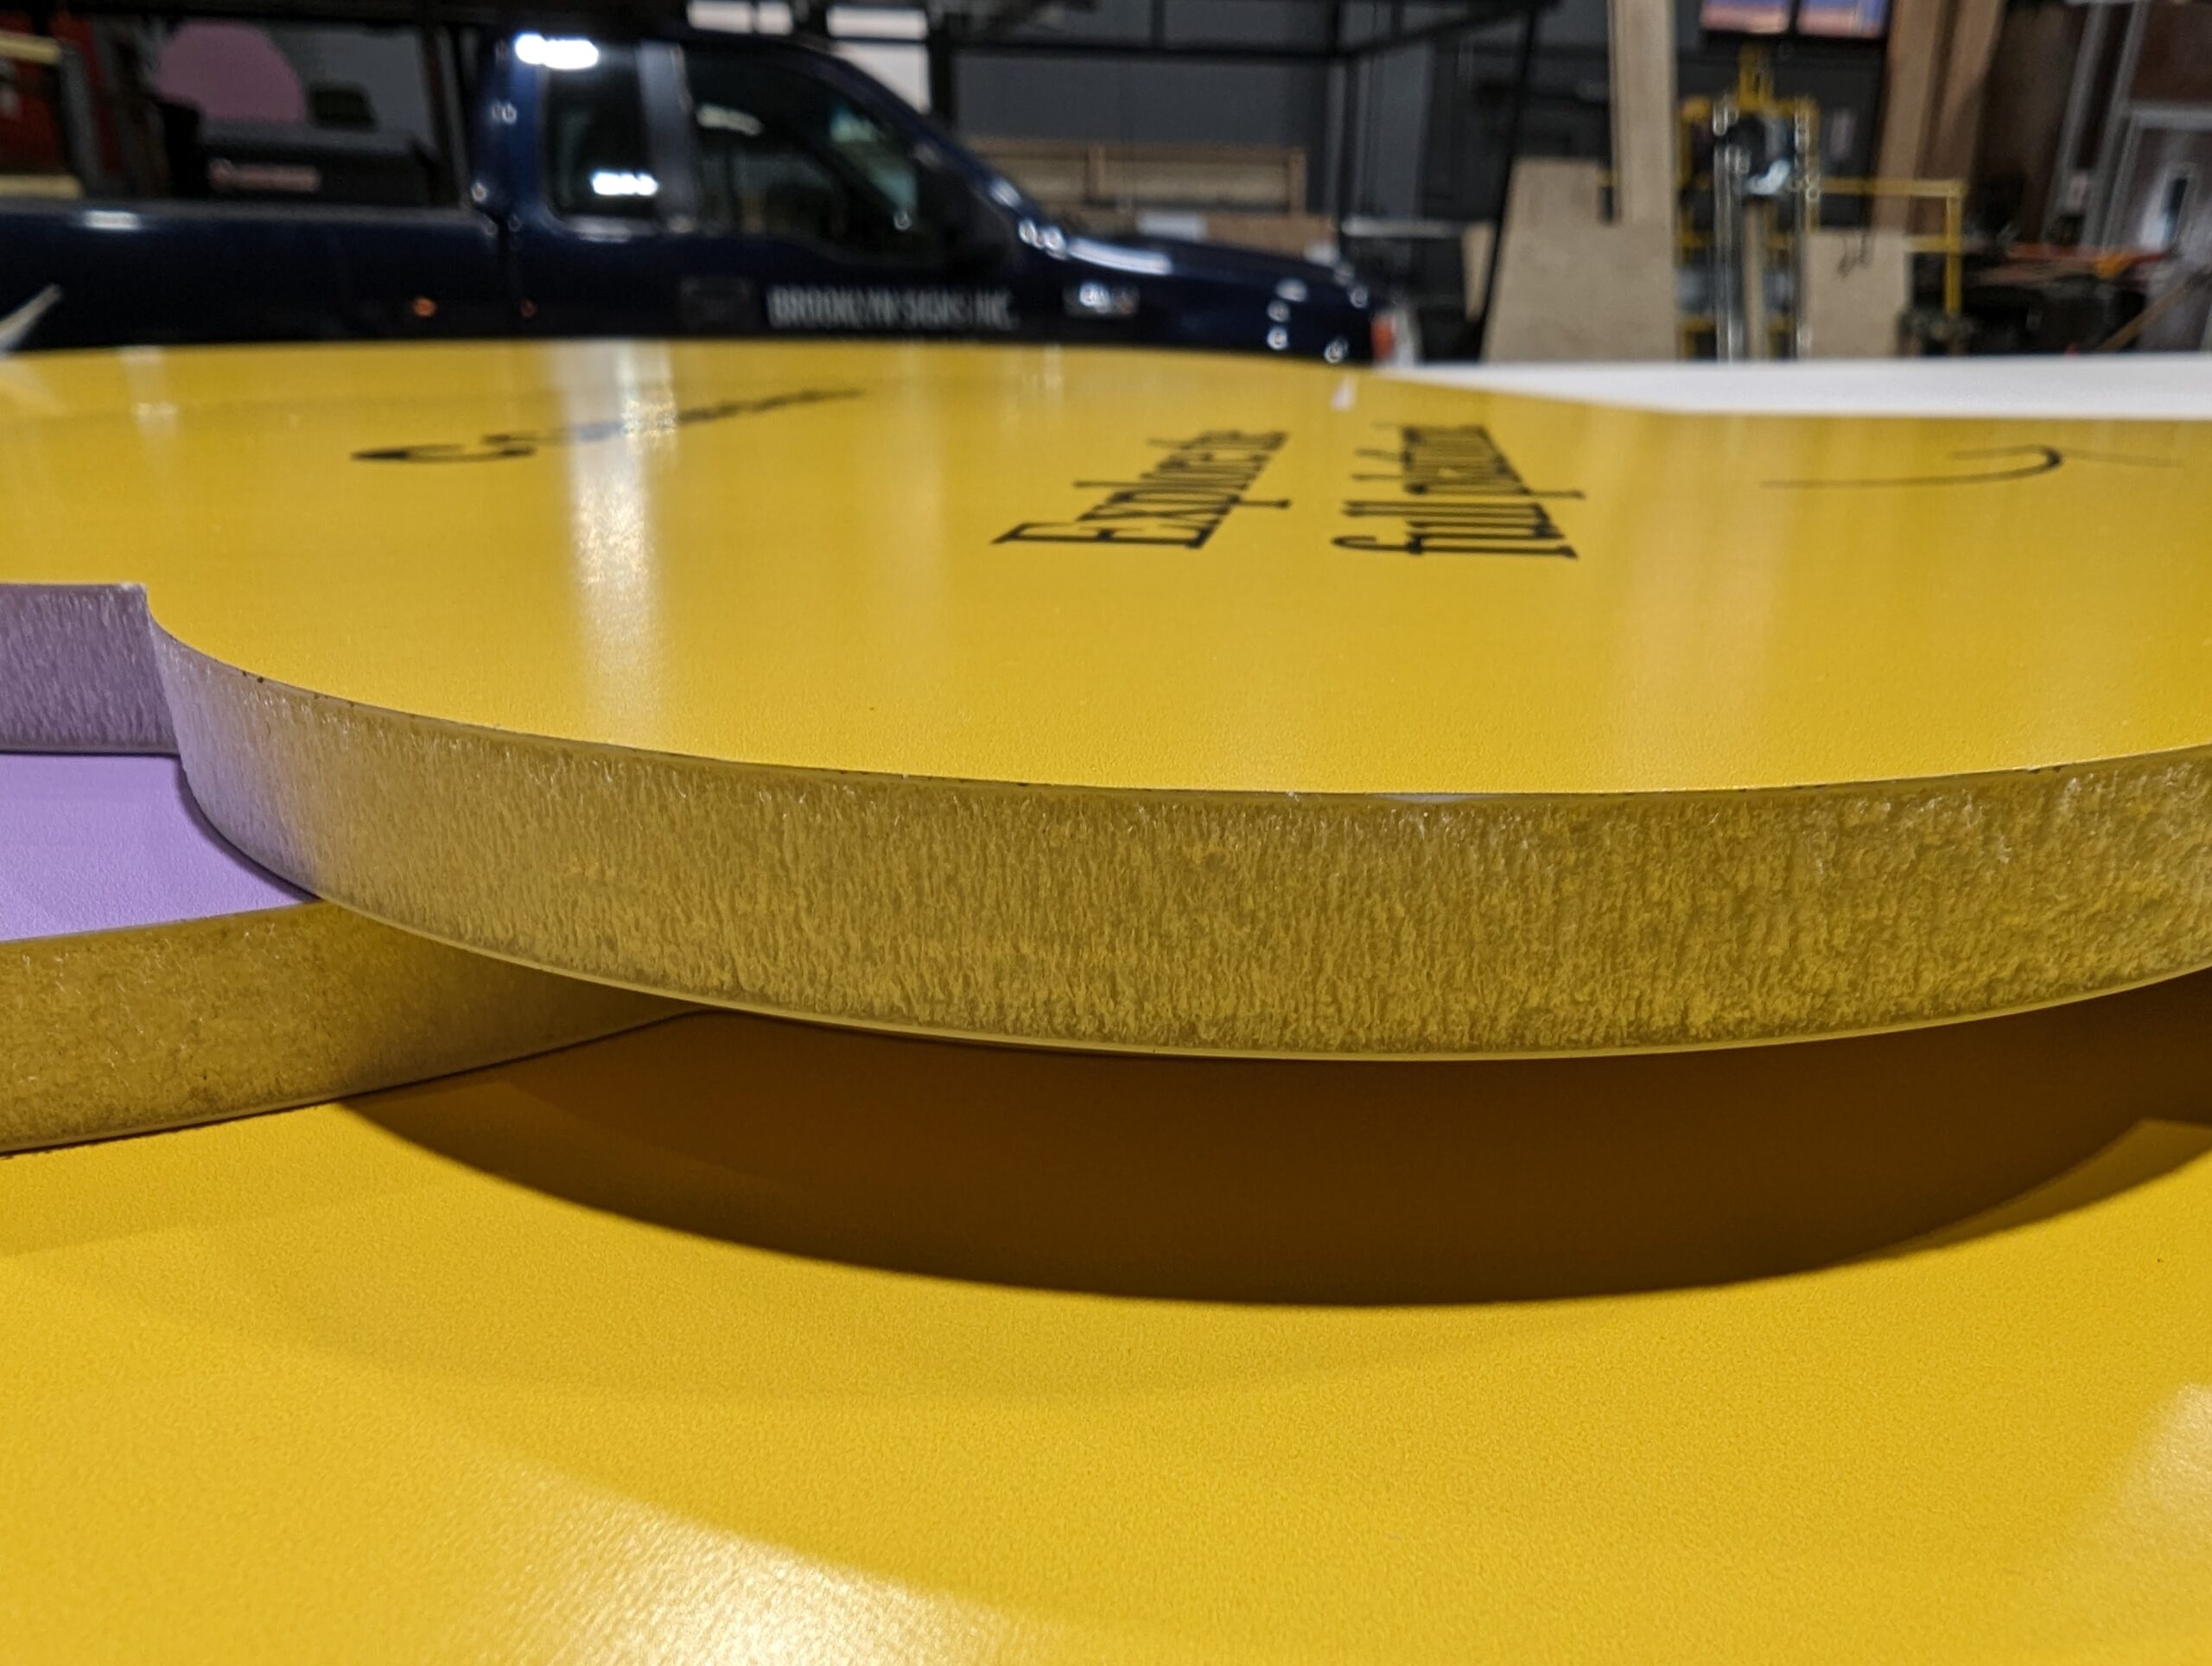 High-Tack Adhesive Foam Core Board - 24 x 36, 3/16 thick